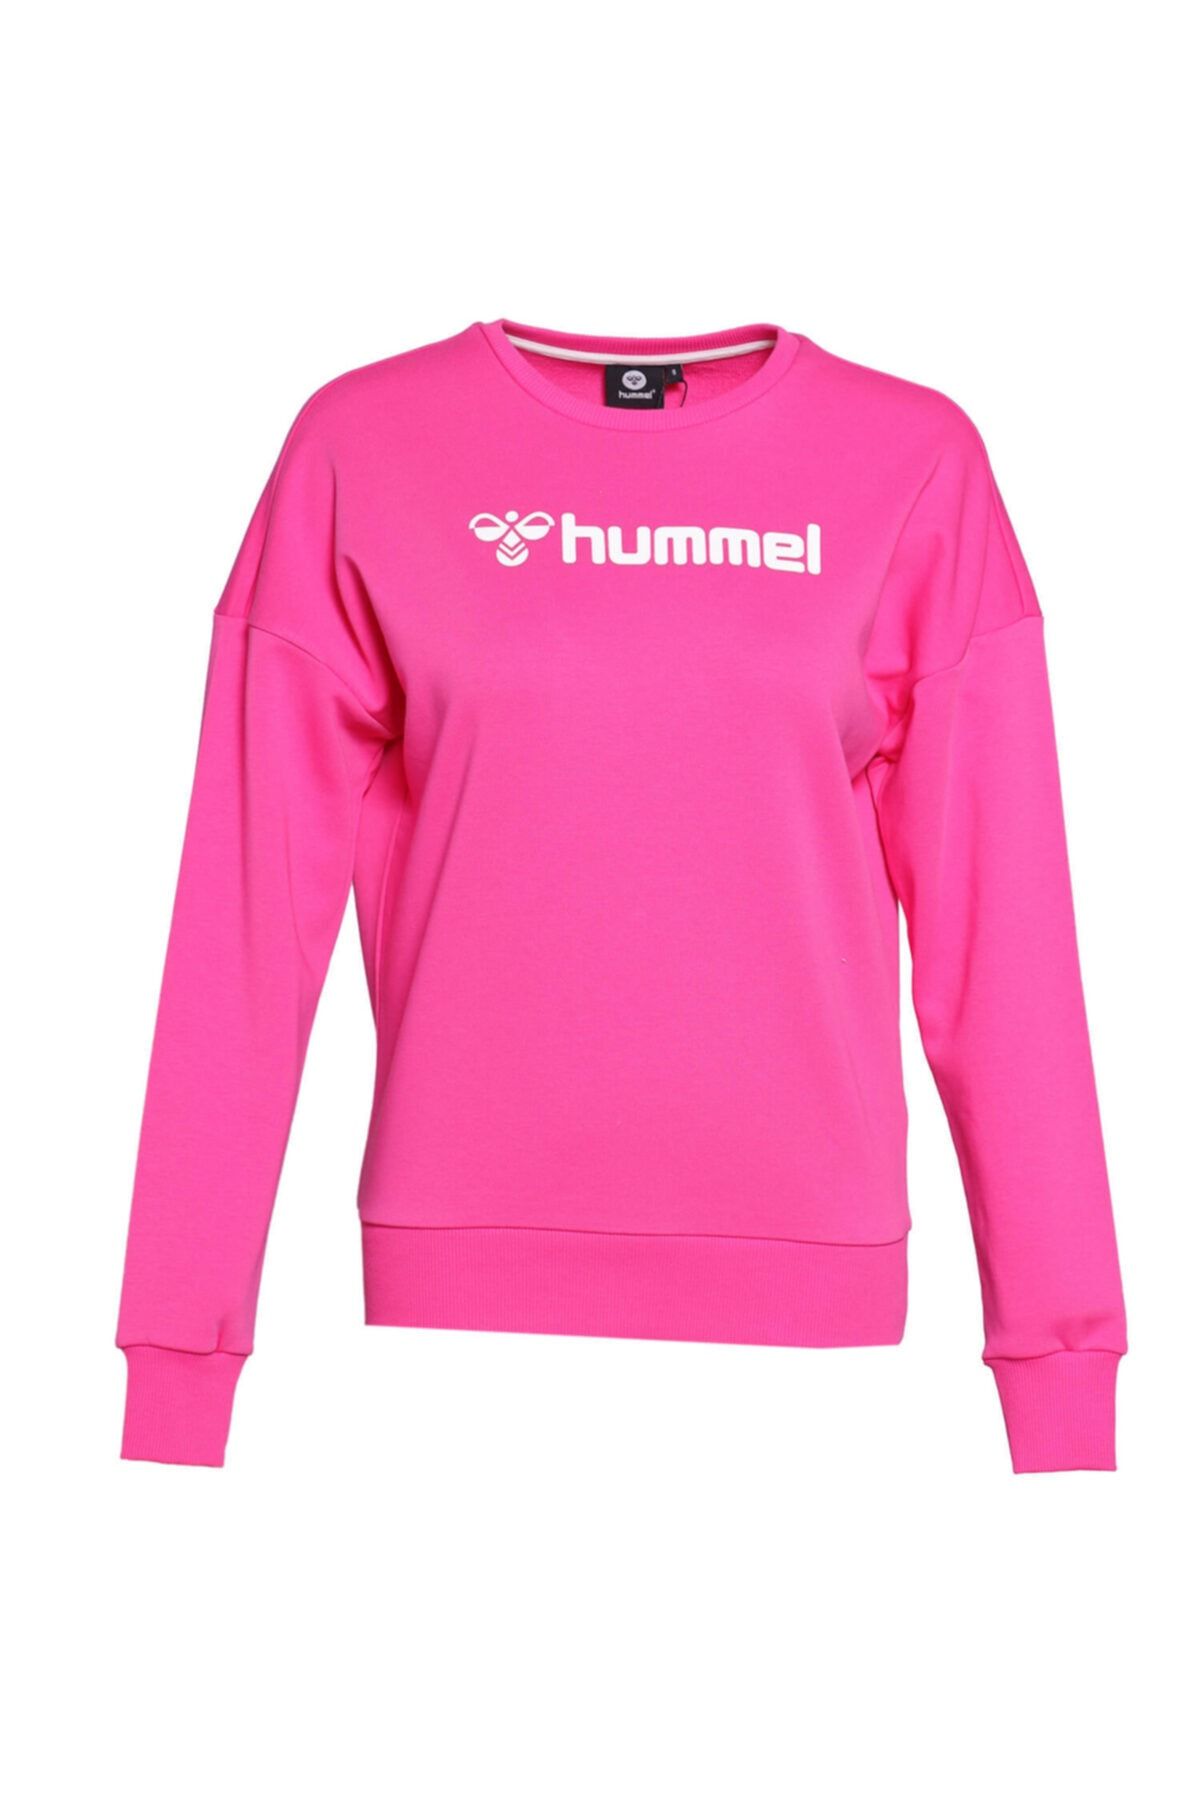 hummel HMLNAOMI Fuşya Kadın Sweatshirt 101085916